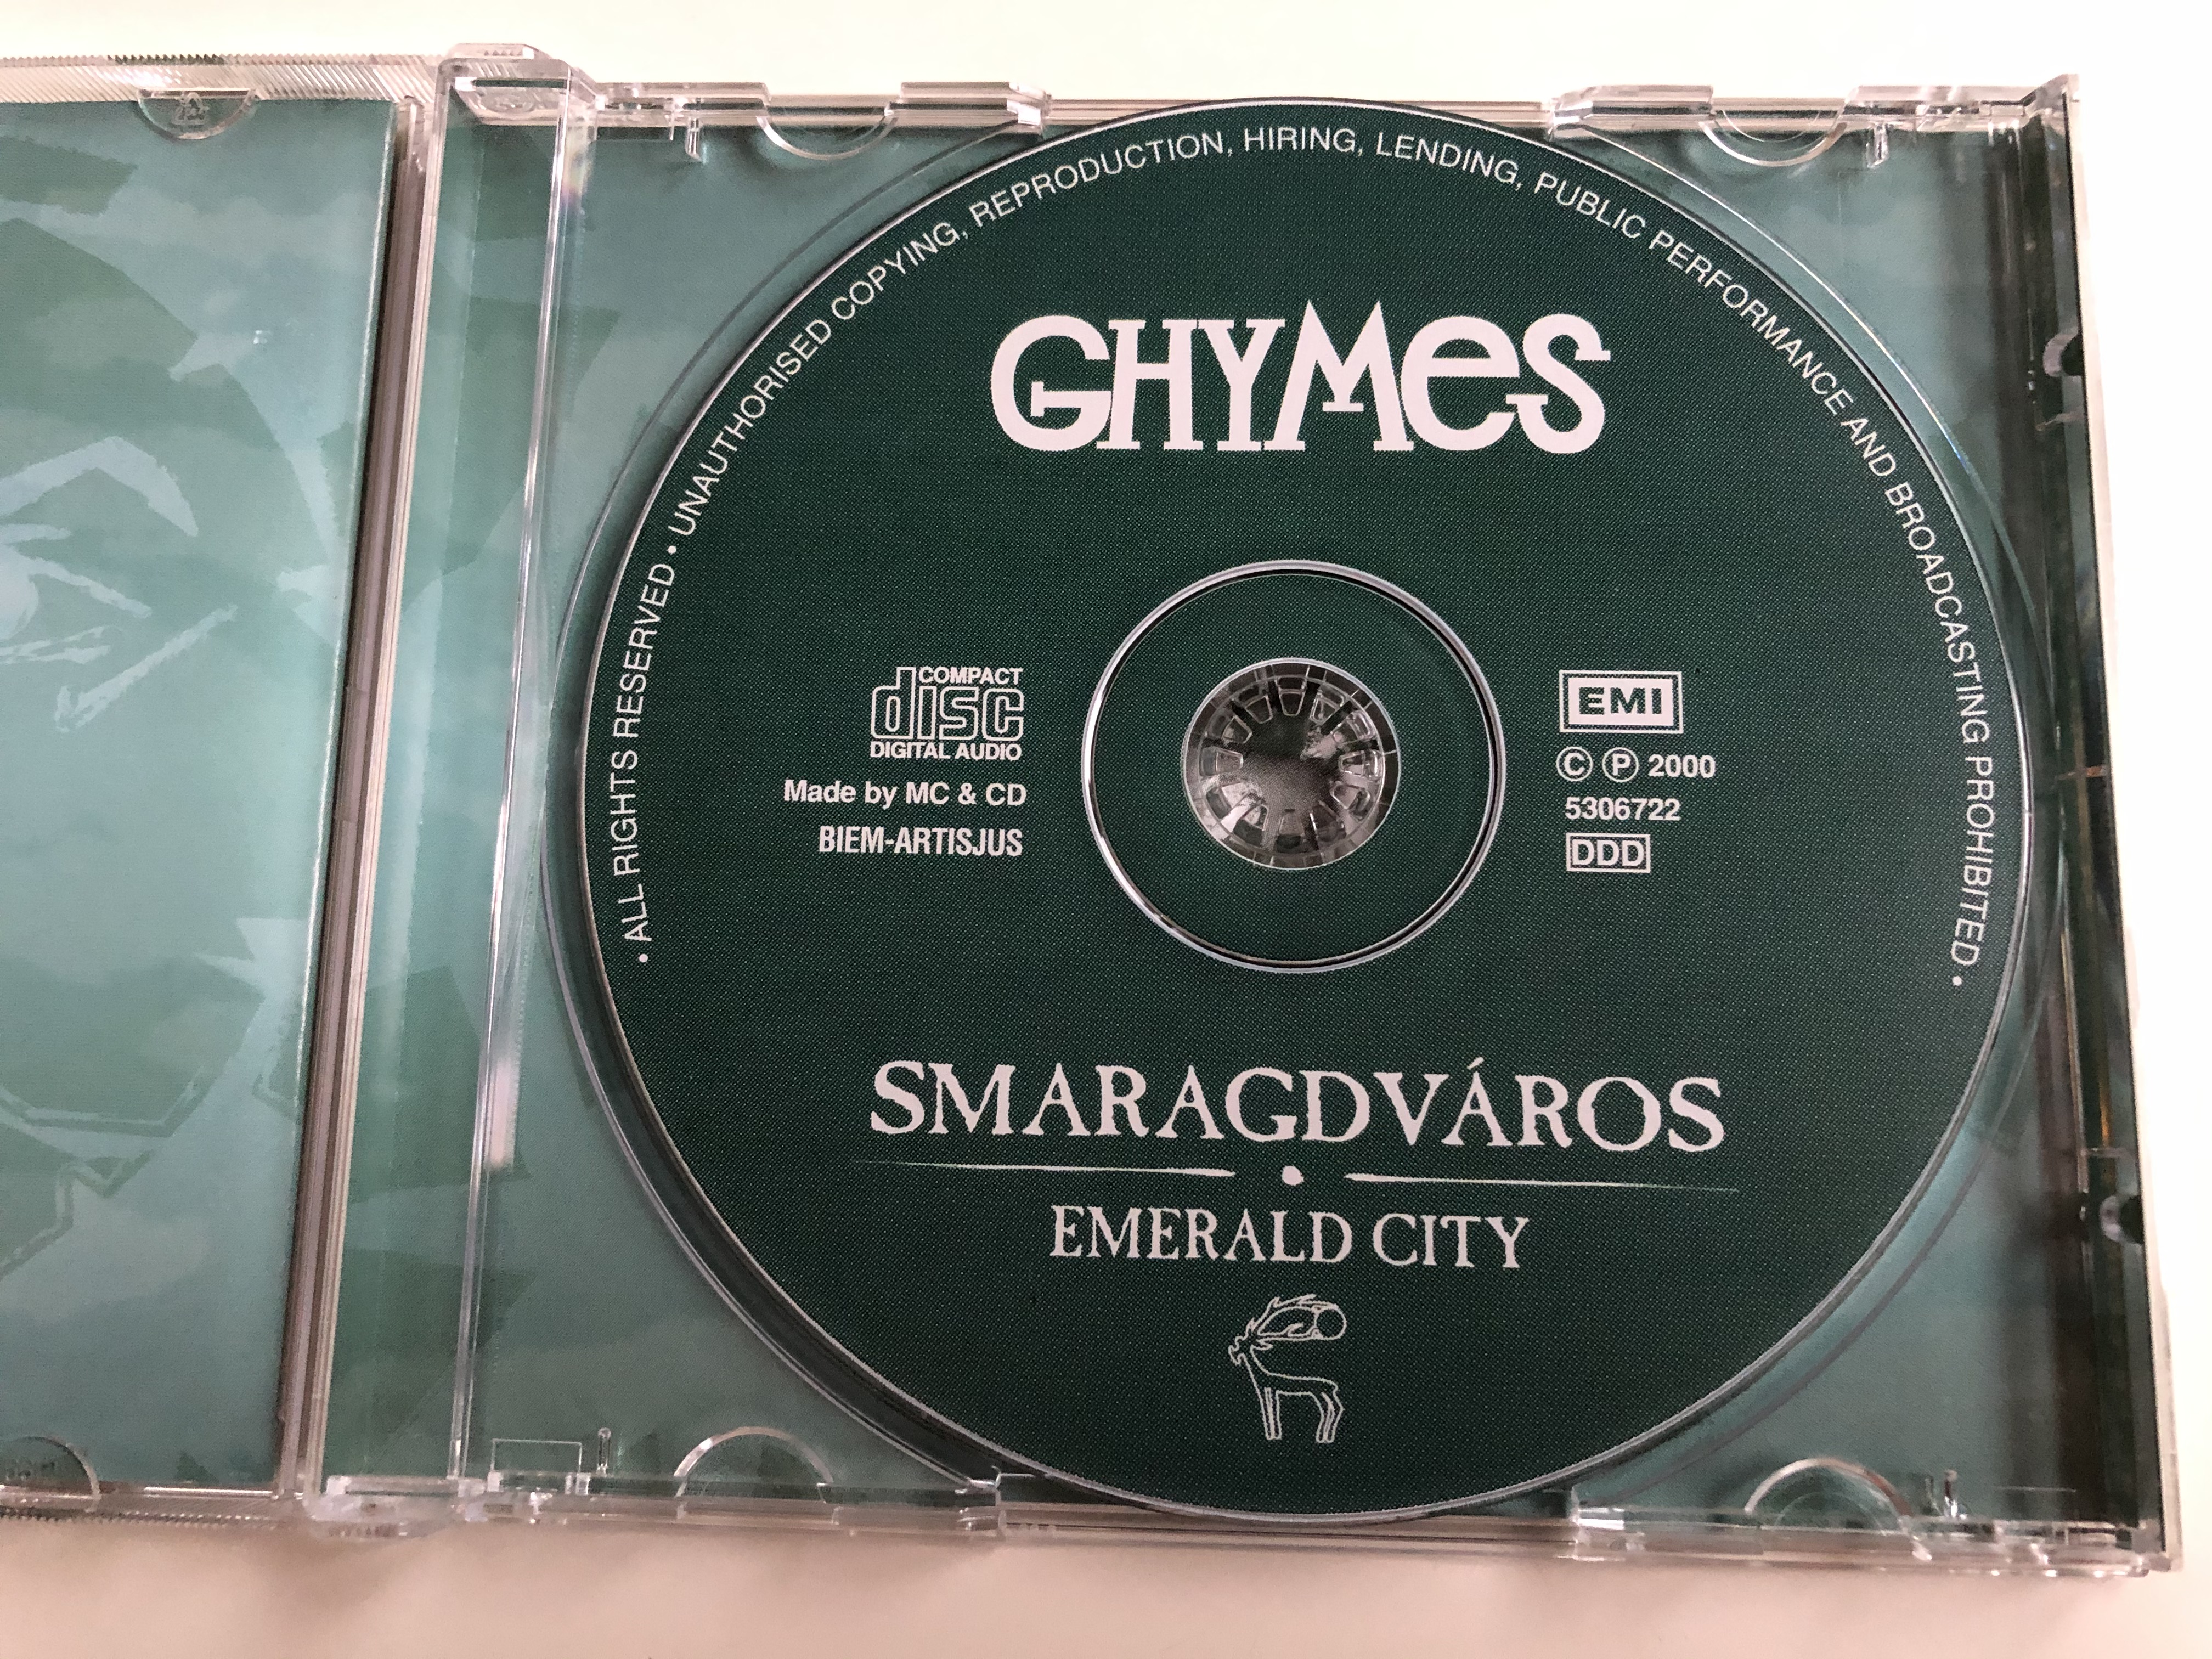 ghymes-smaragdv-ros-emerald-city-emi-audio-cd-2000-5306722-6-.jpg